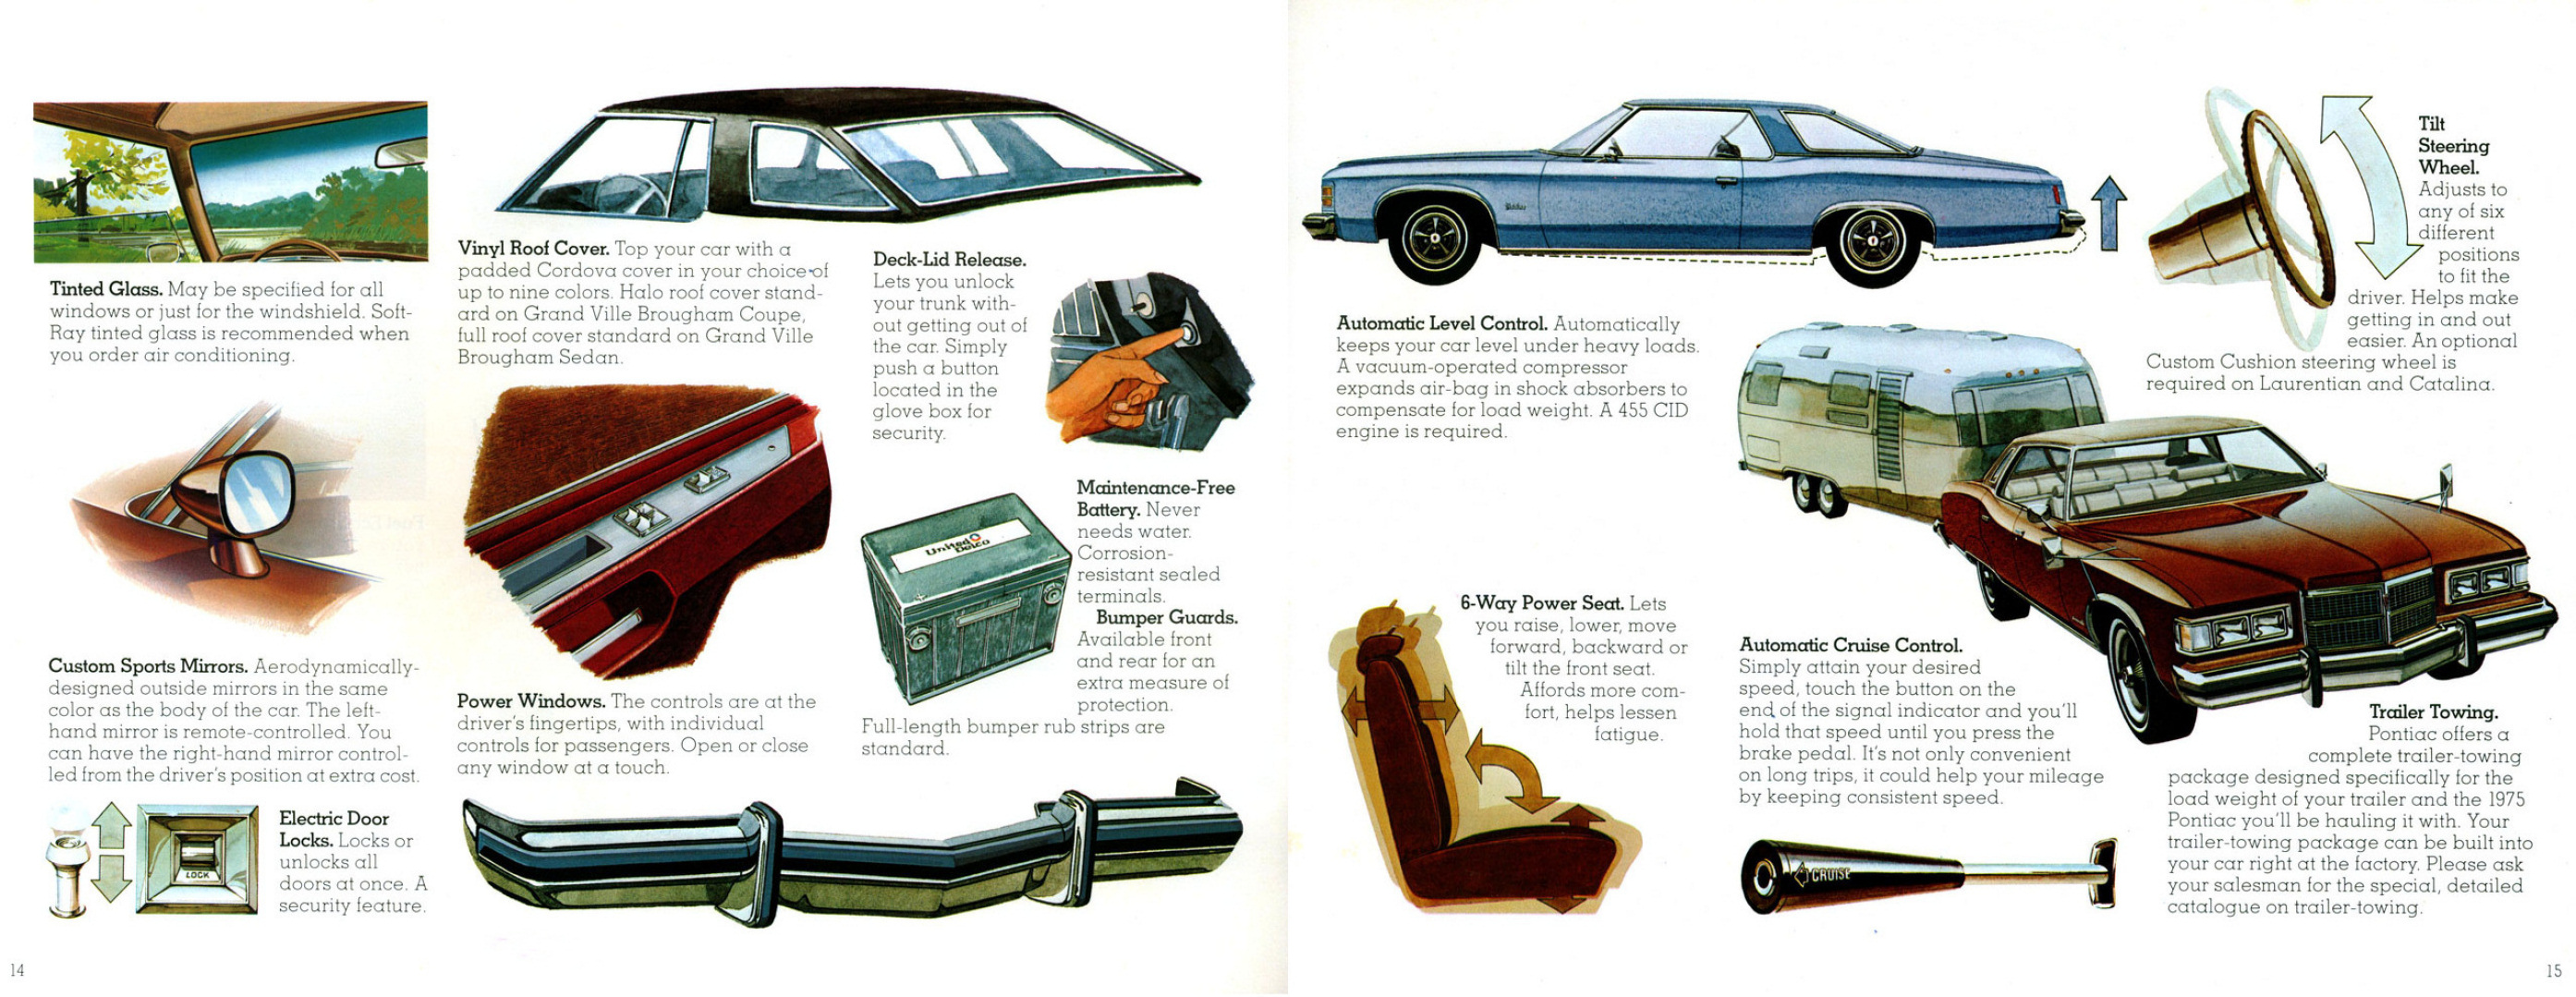 1975_Pontiac_Full_Size_Cdn-14-15